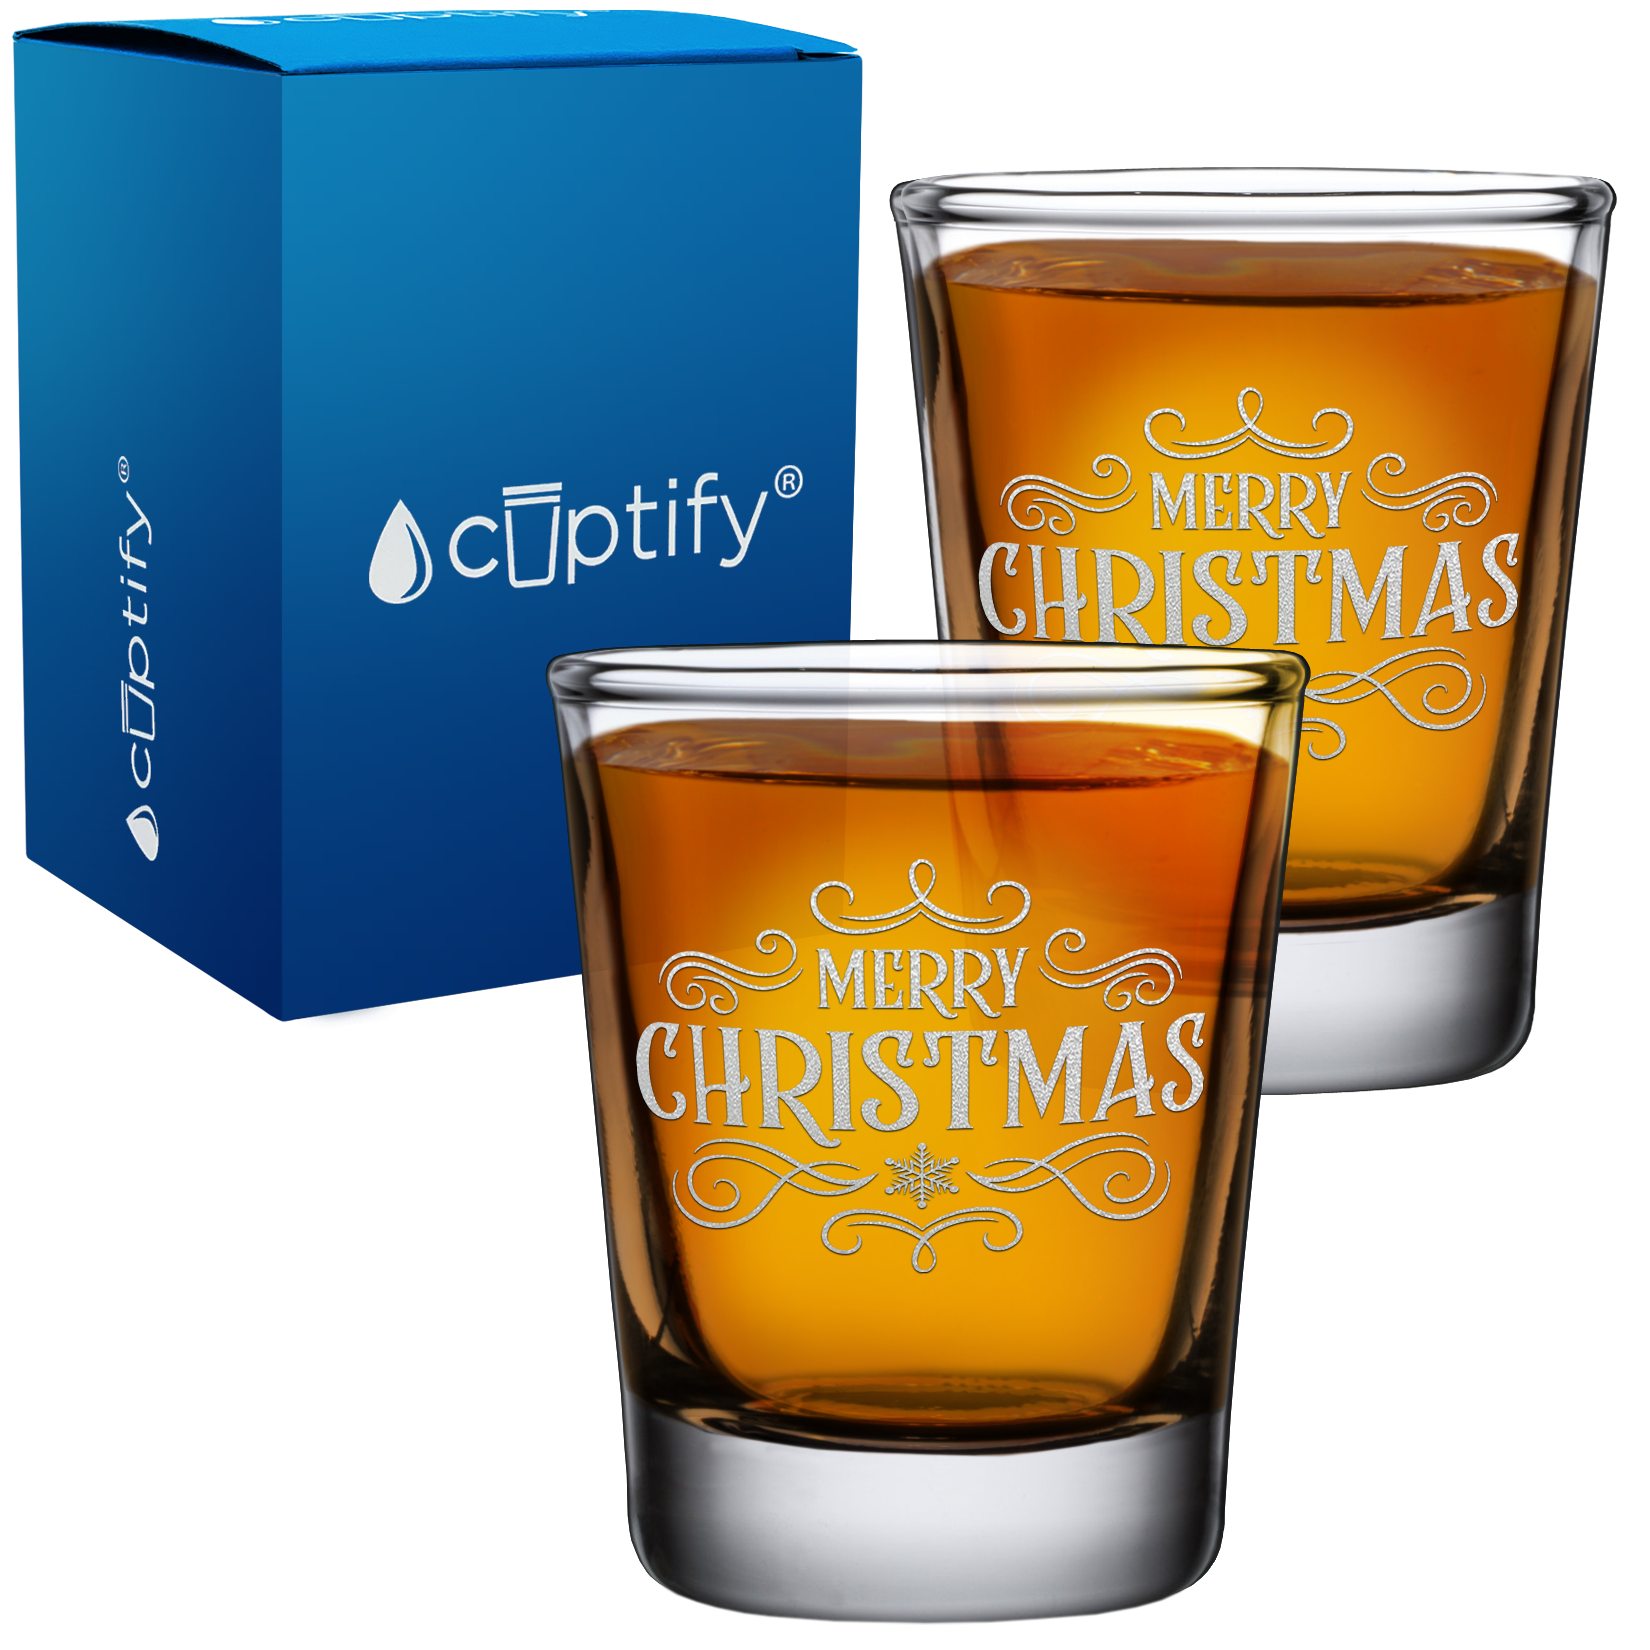 Merry Christmas on 2oz Shot Glasses - Set of 2